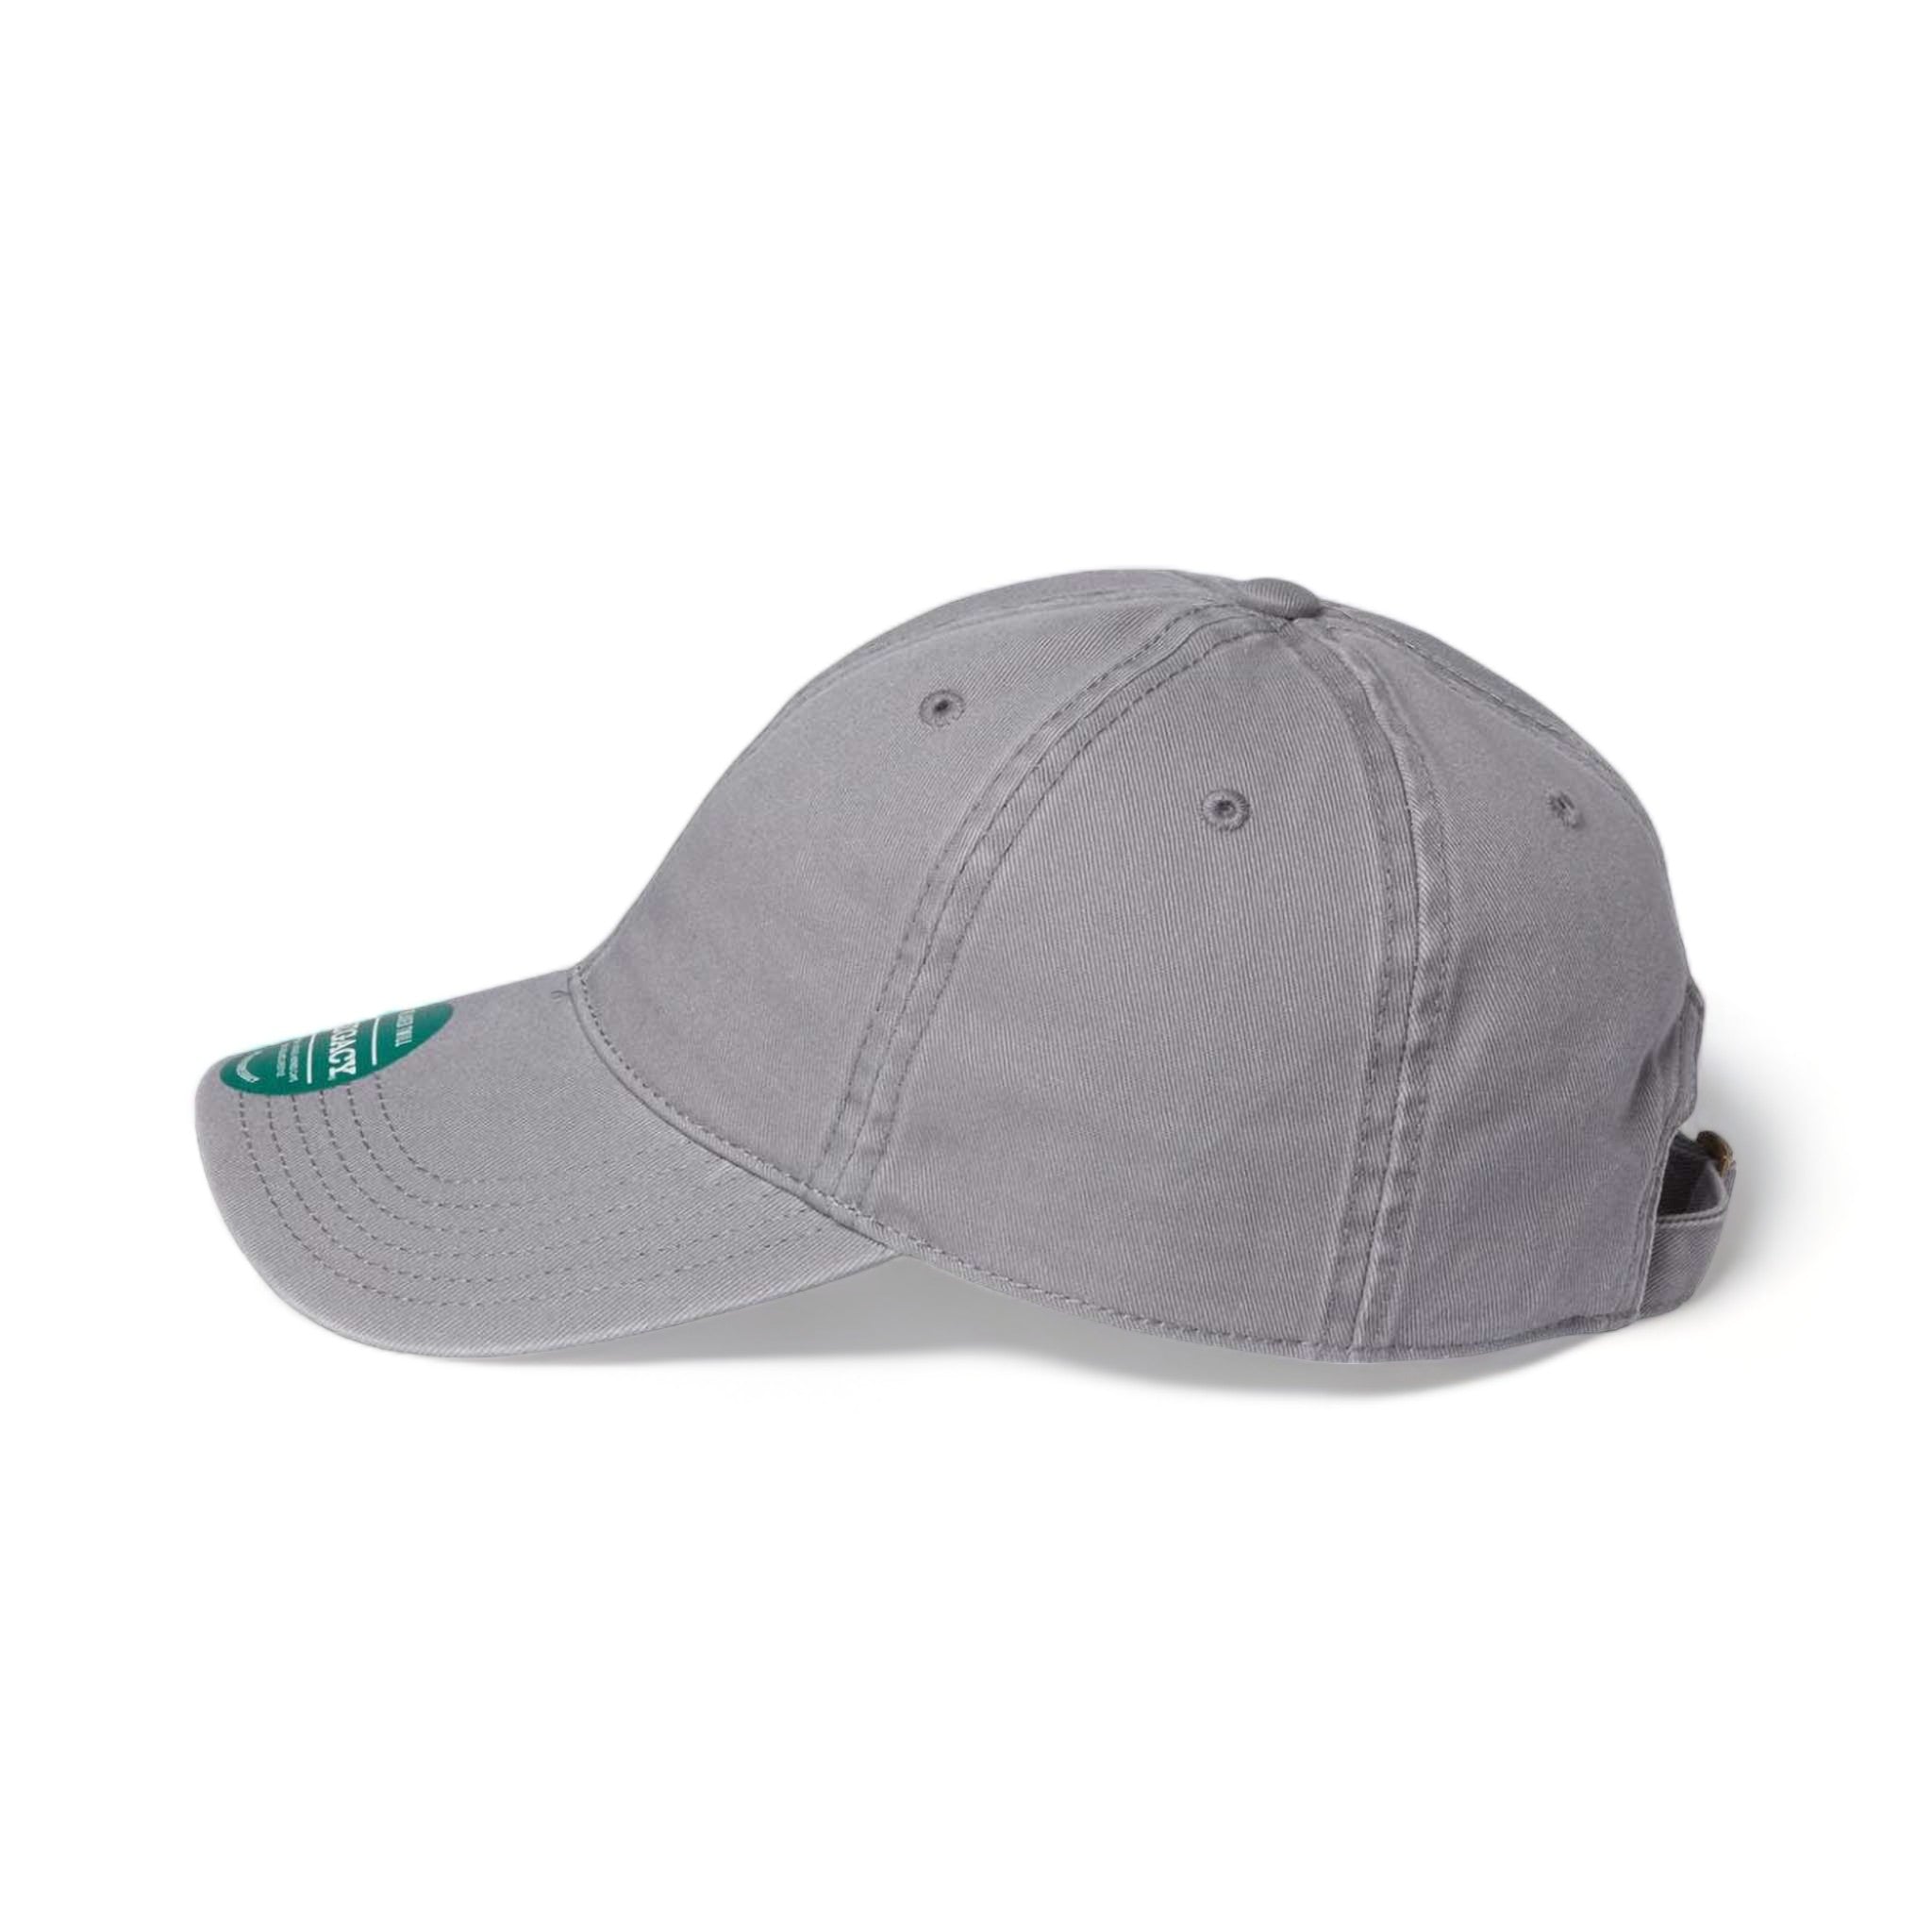 Side view of LEGACY EZA custom hat in grey